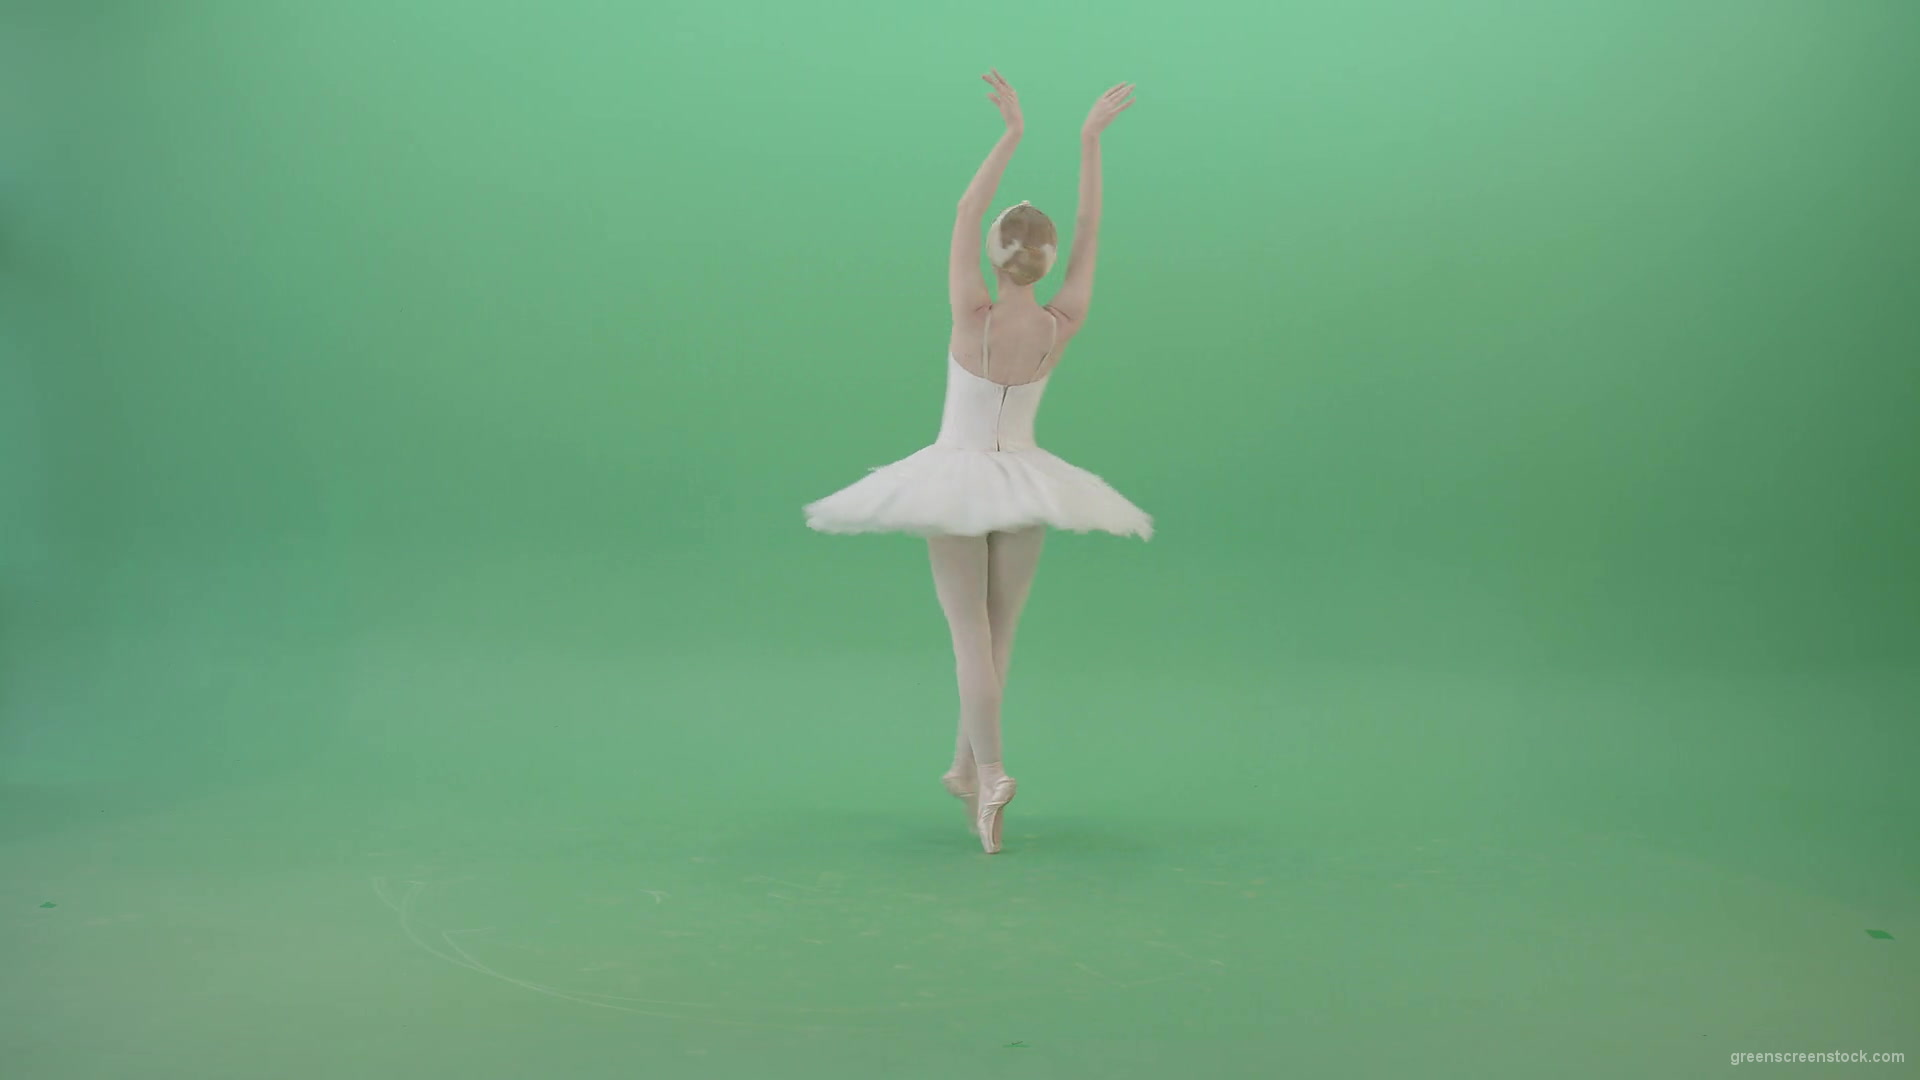 Grace-Ballerina-dance-classical-ballet-art-in-white-costume-on-green-screen-4K-Video-Footage-1920_007 Green Screen Stock